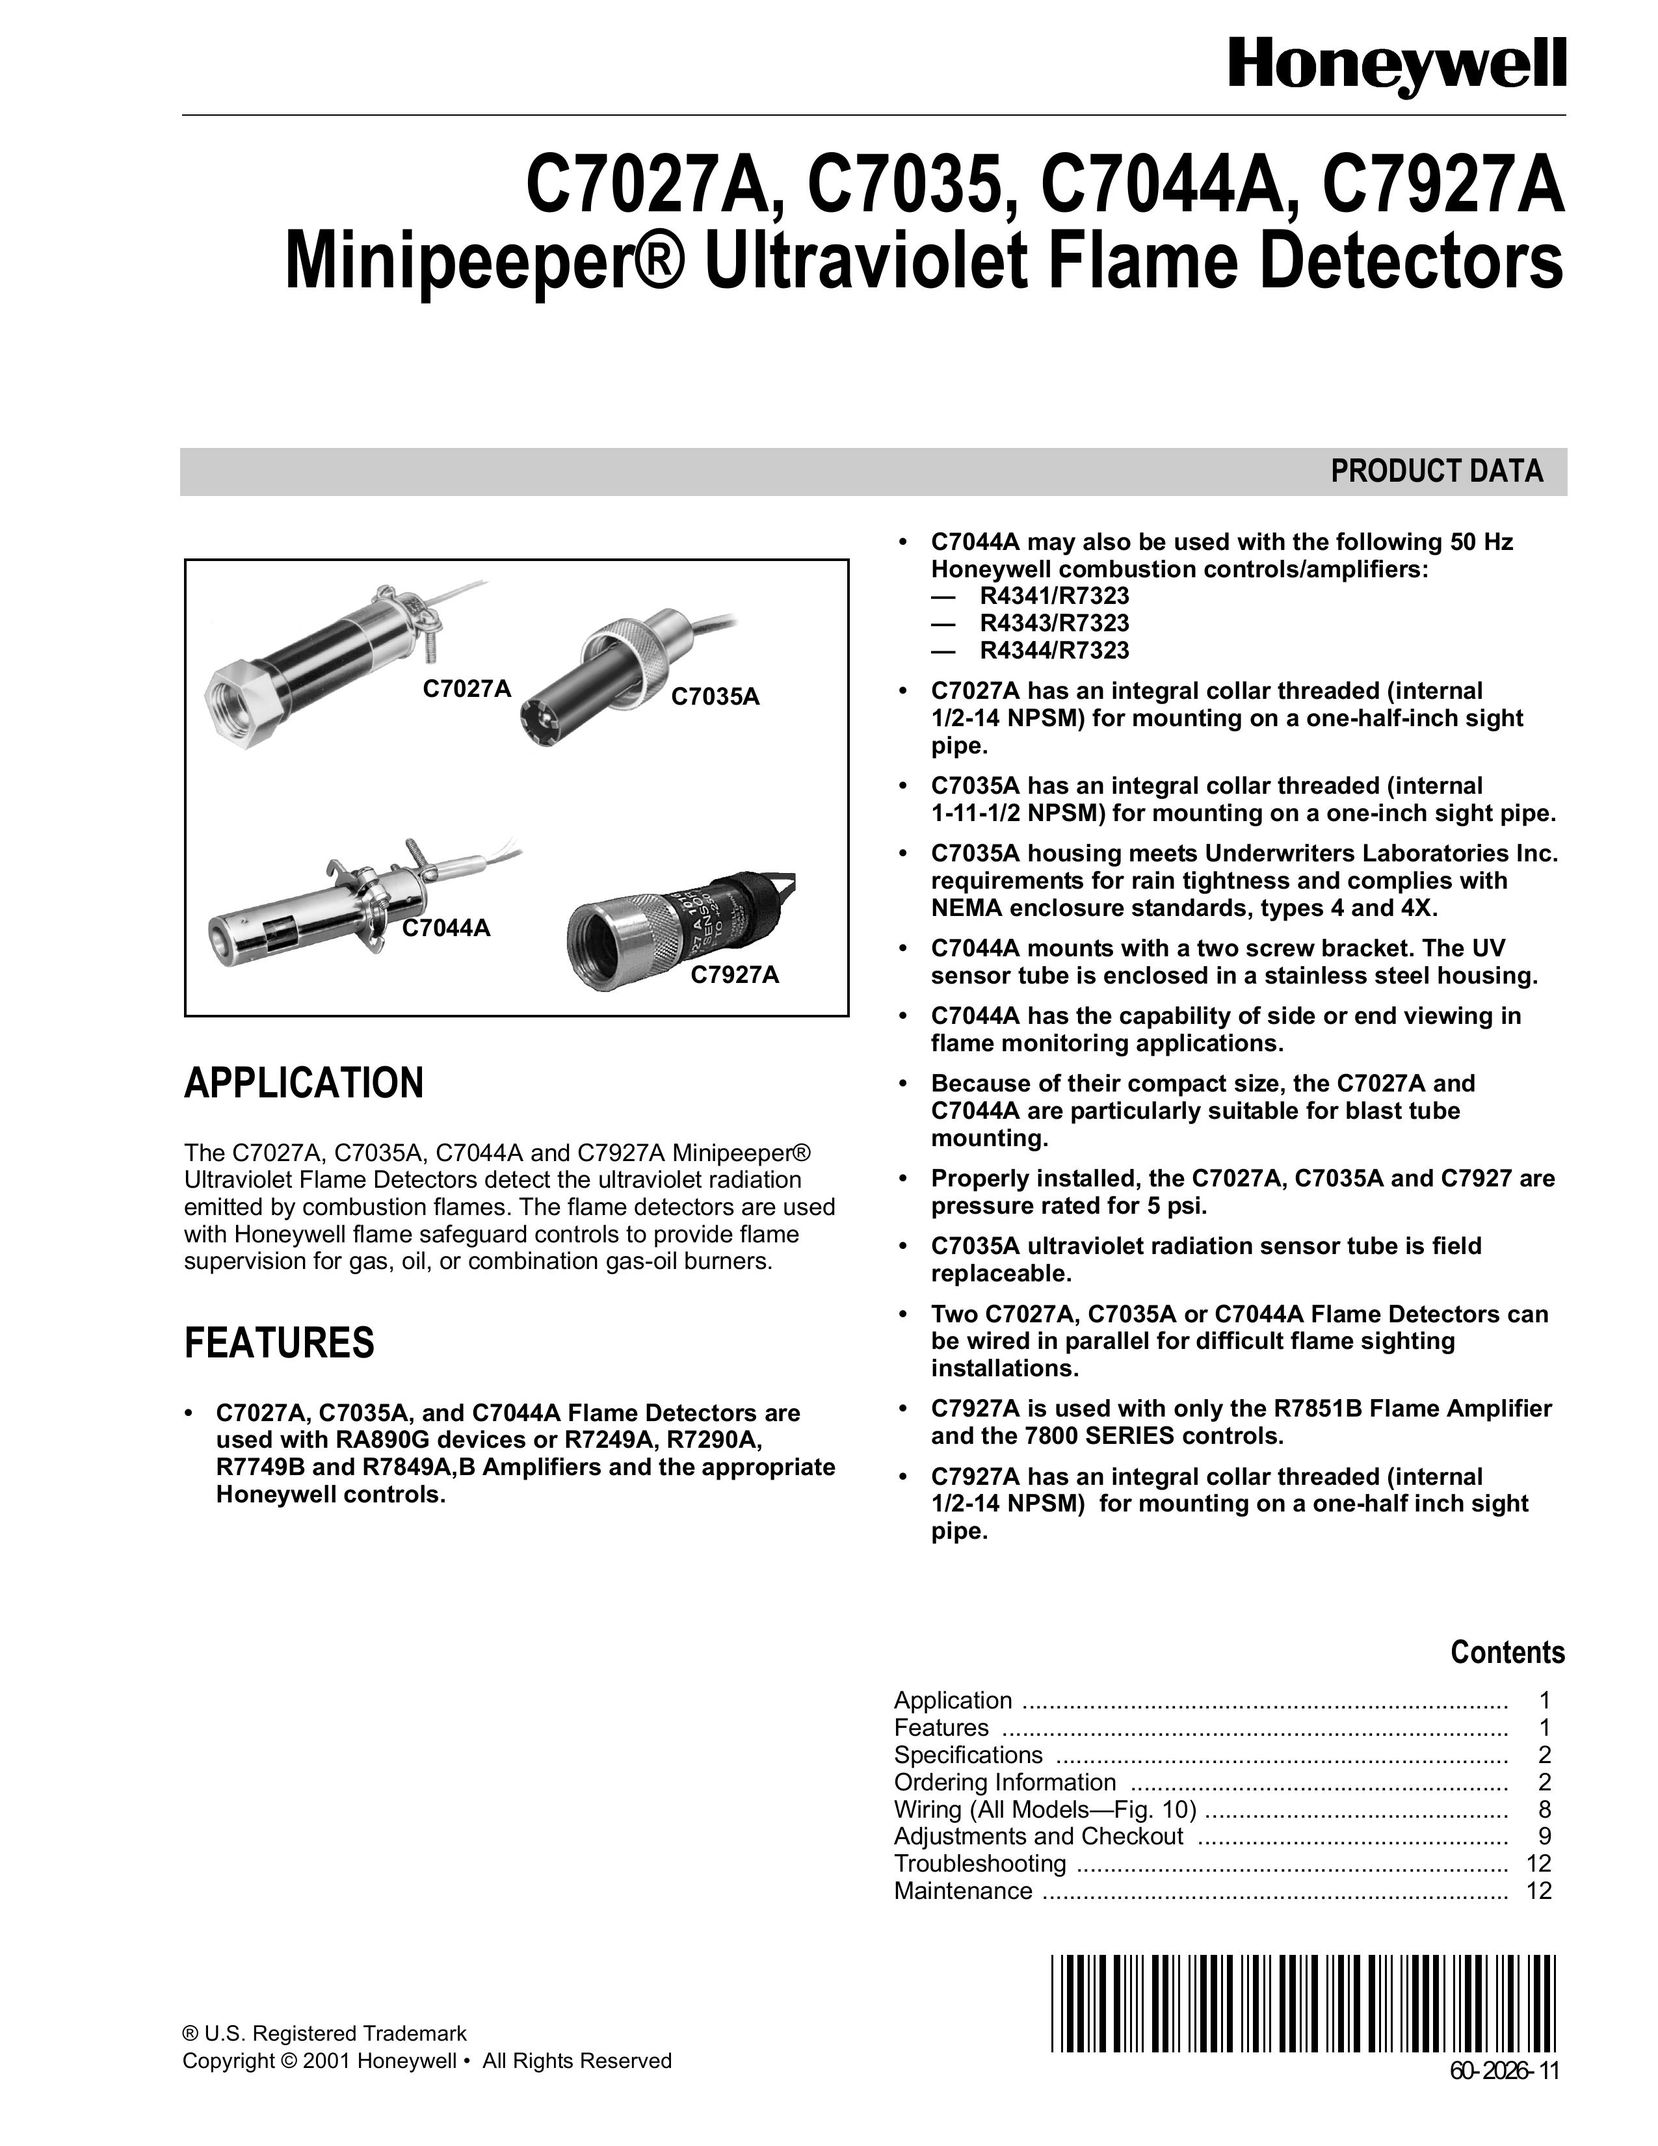 Honeywell C7044A Carbon Monoxide Alarm User Manual